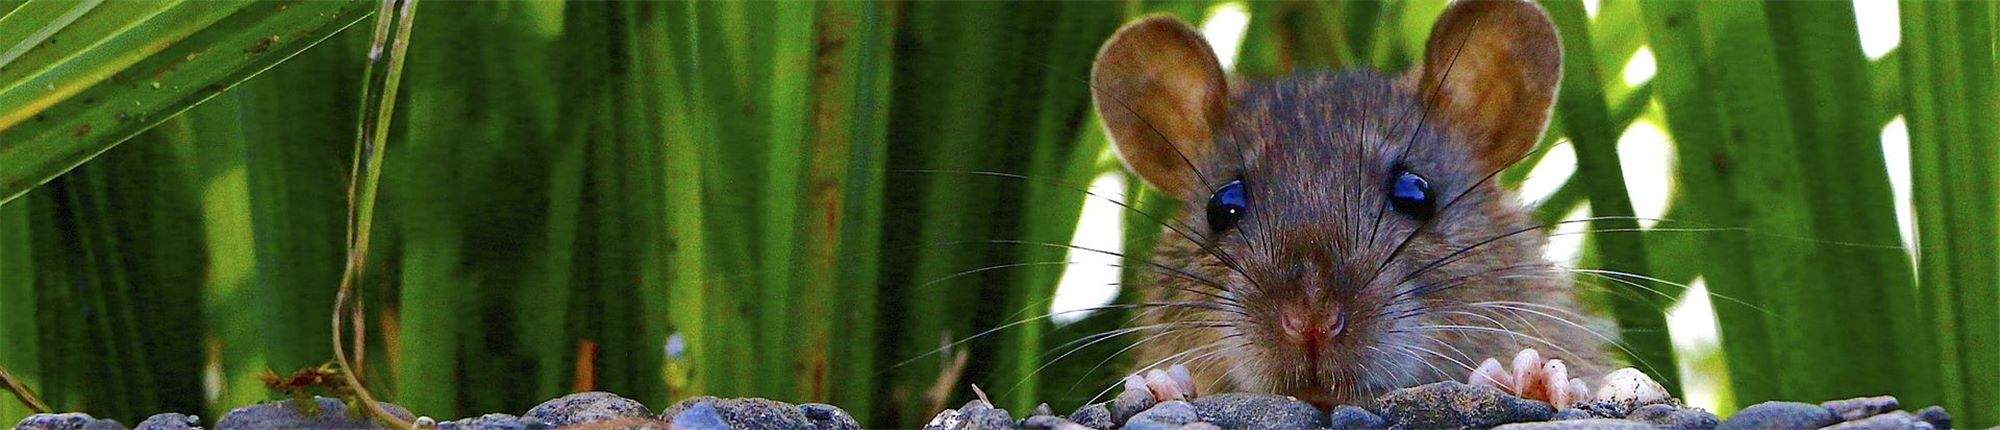 Ratten Im Garten Inspirierend Abhilfe Gegen Ratten